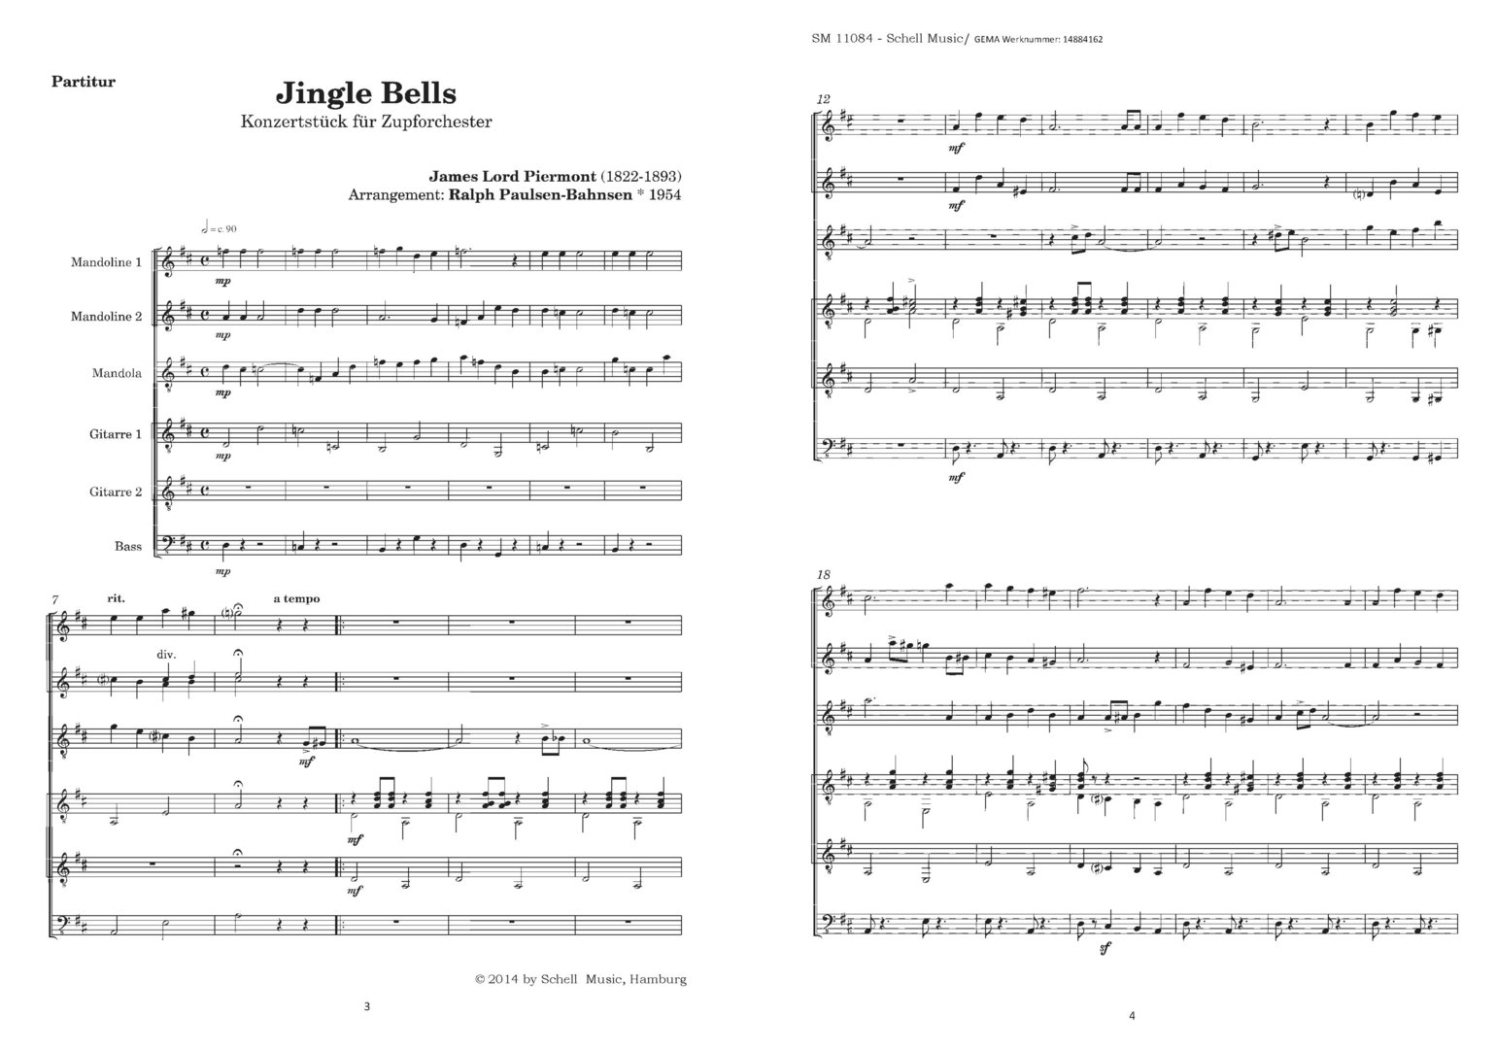 jingle-bells-zupforc_0006.JPG